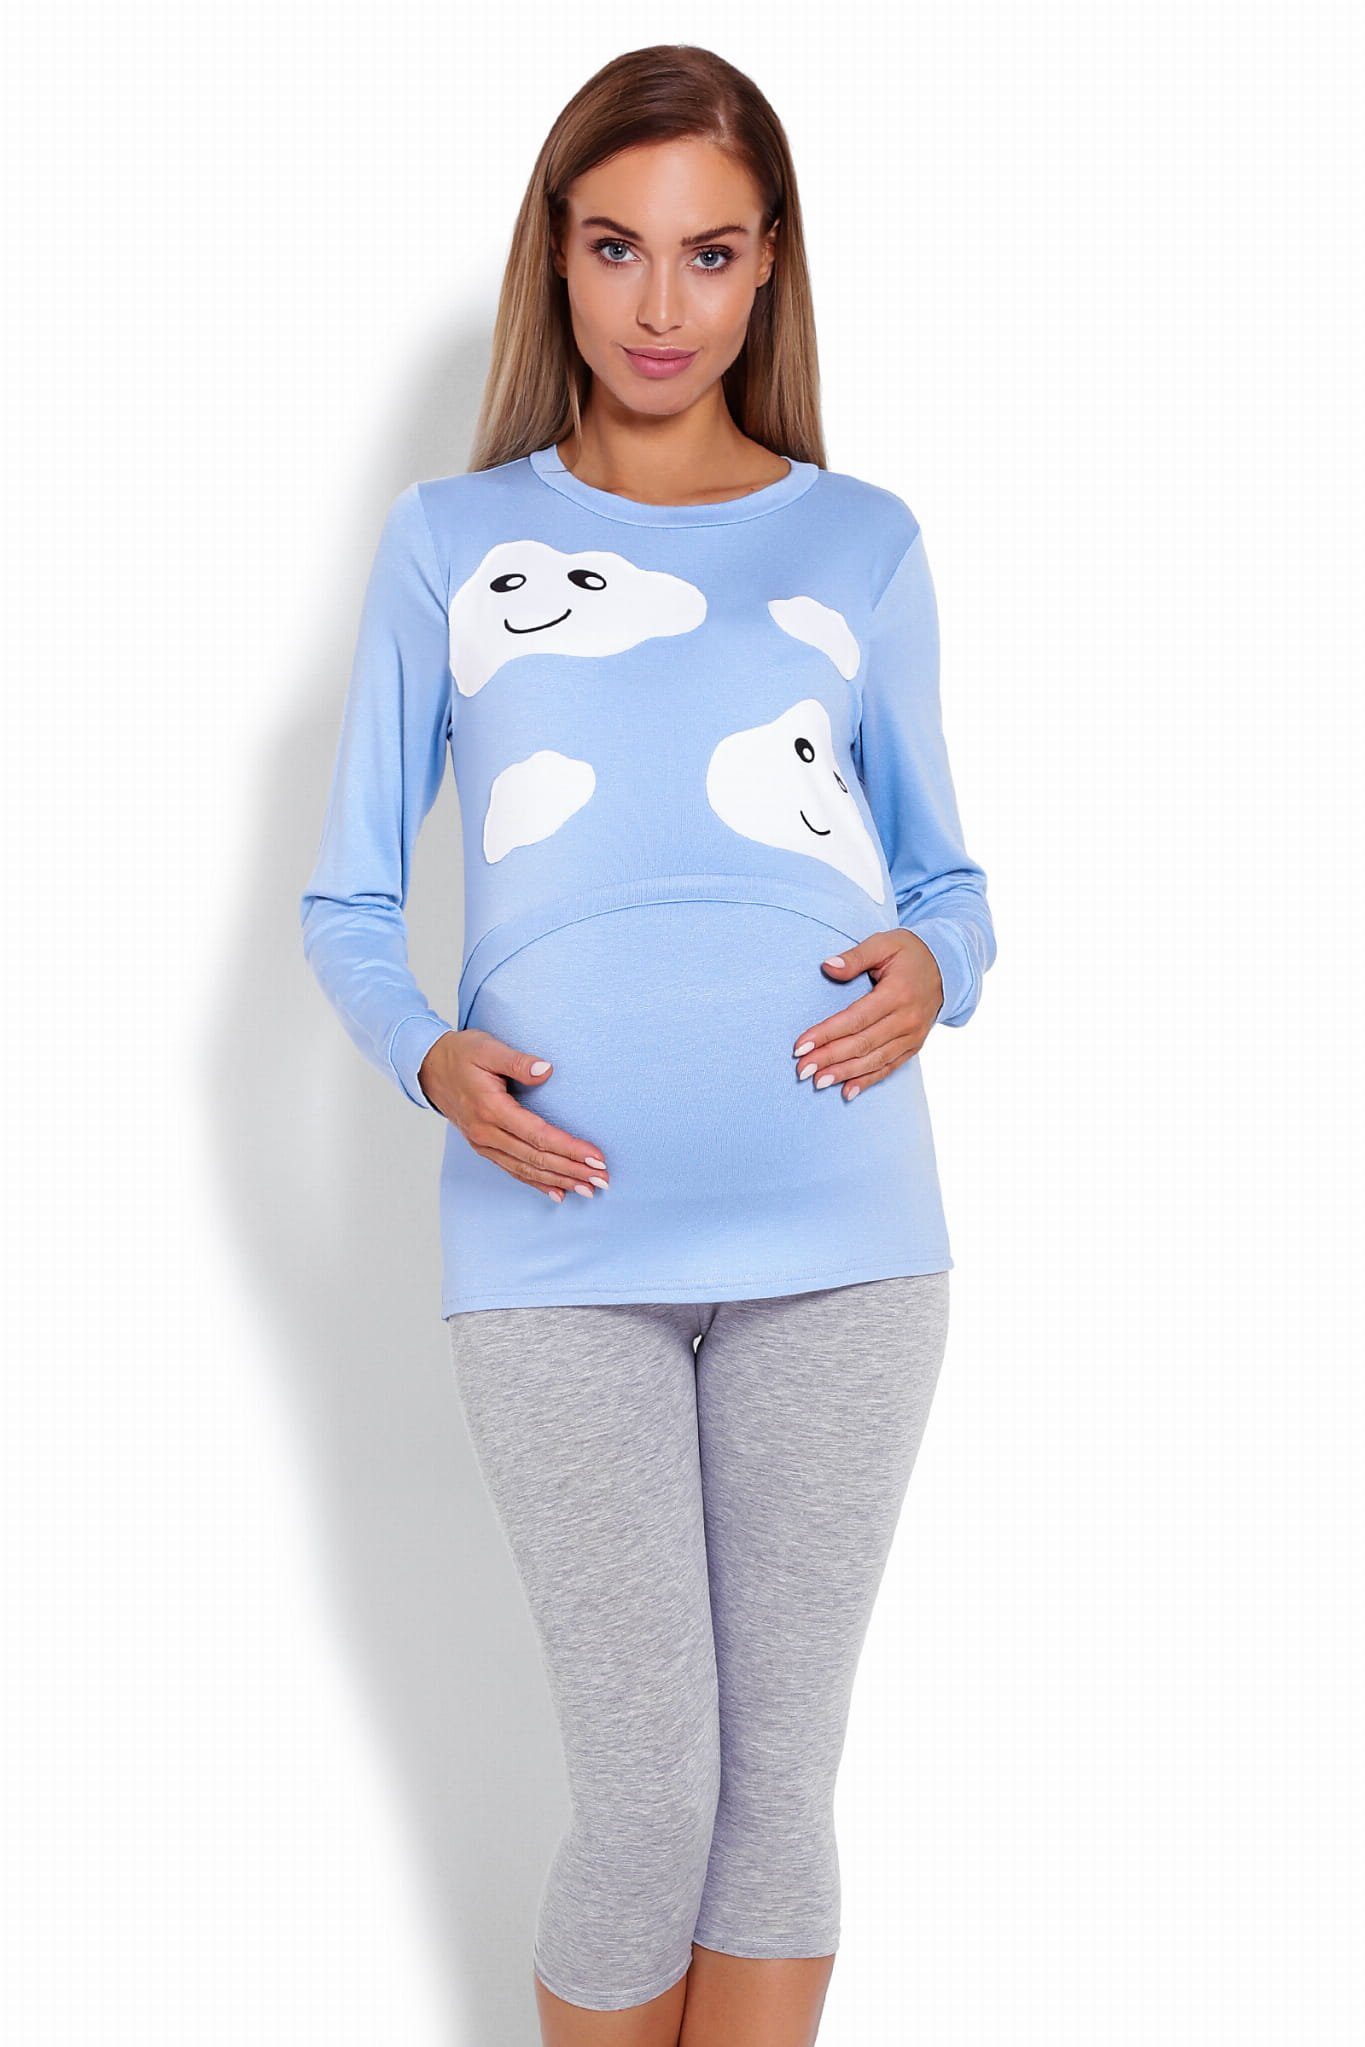 Umstandspyjama Schlafanzug Schwangerschaft Stillschlafanzug Stillen blau/grau PeeKaBoo